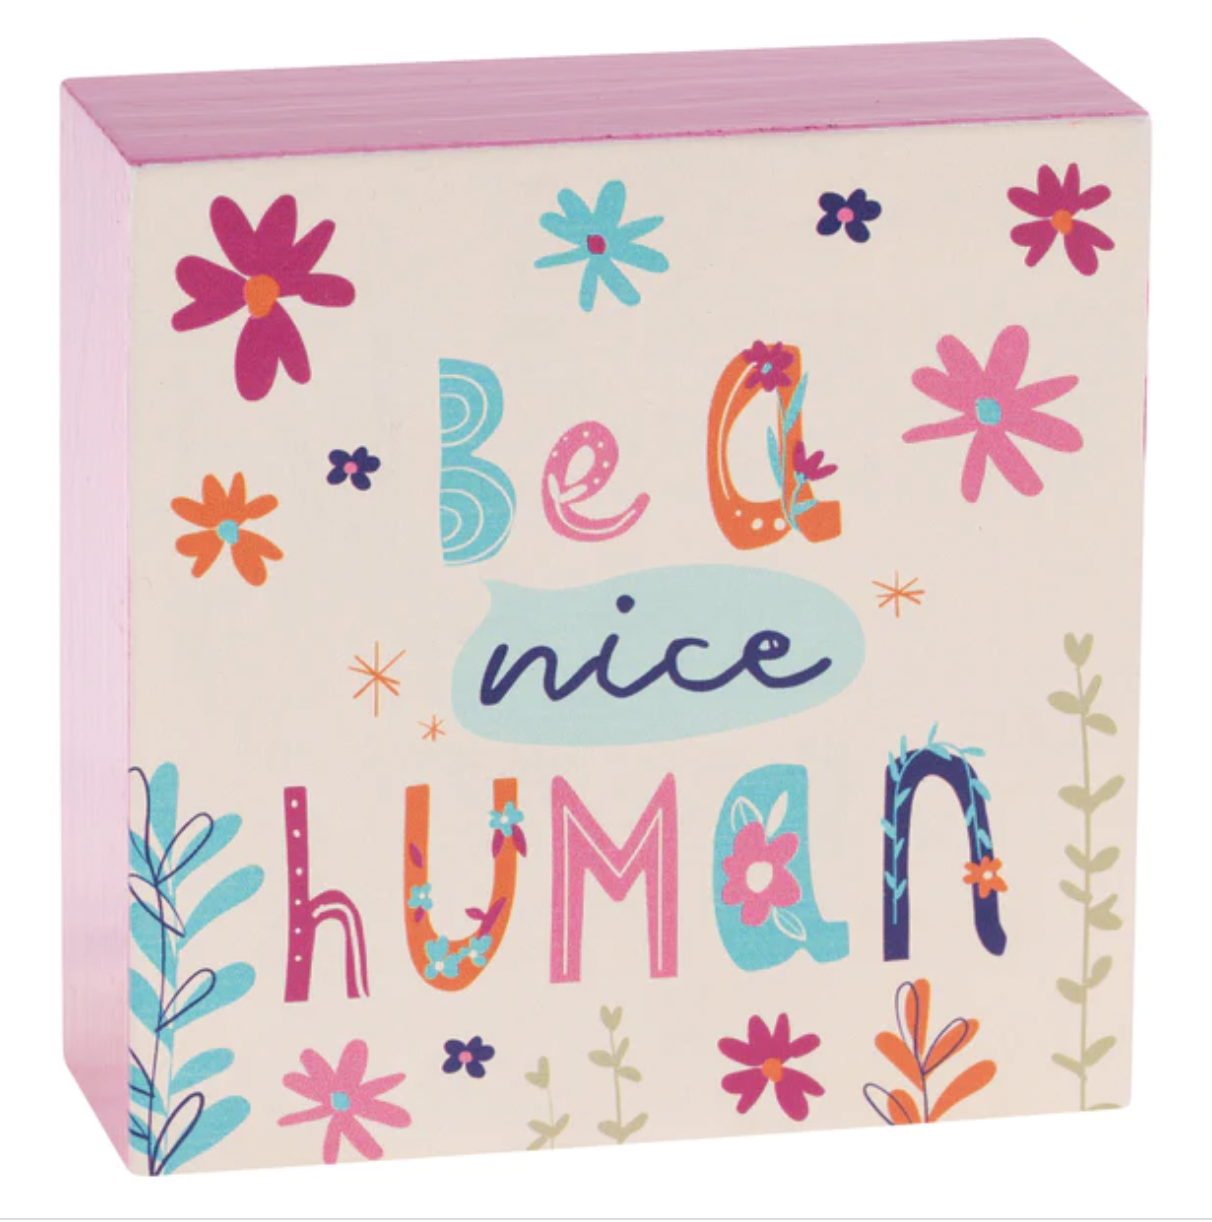 "Be A Nice Human" Wood Block